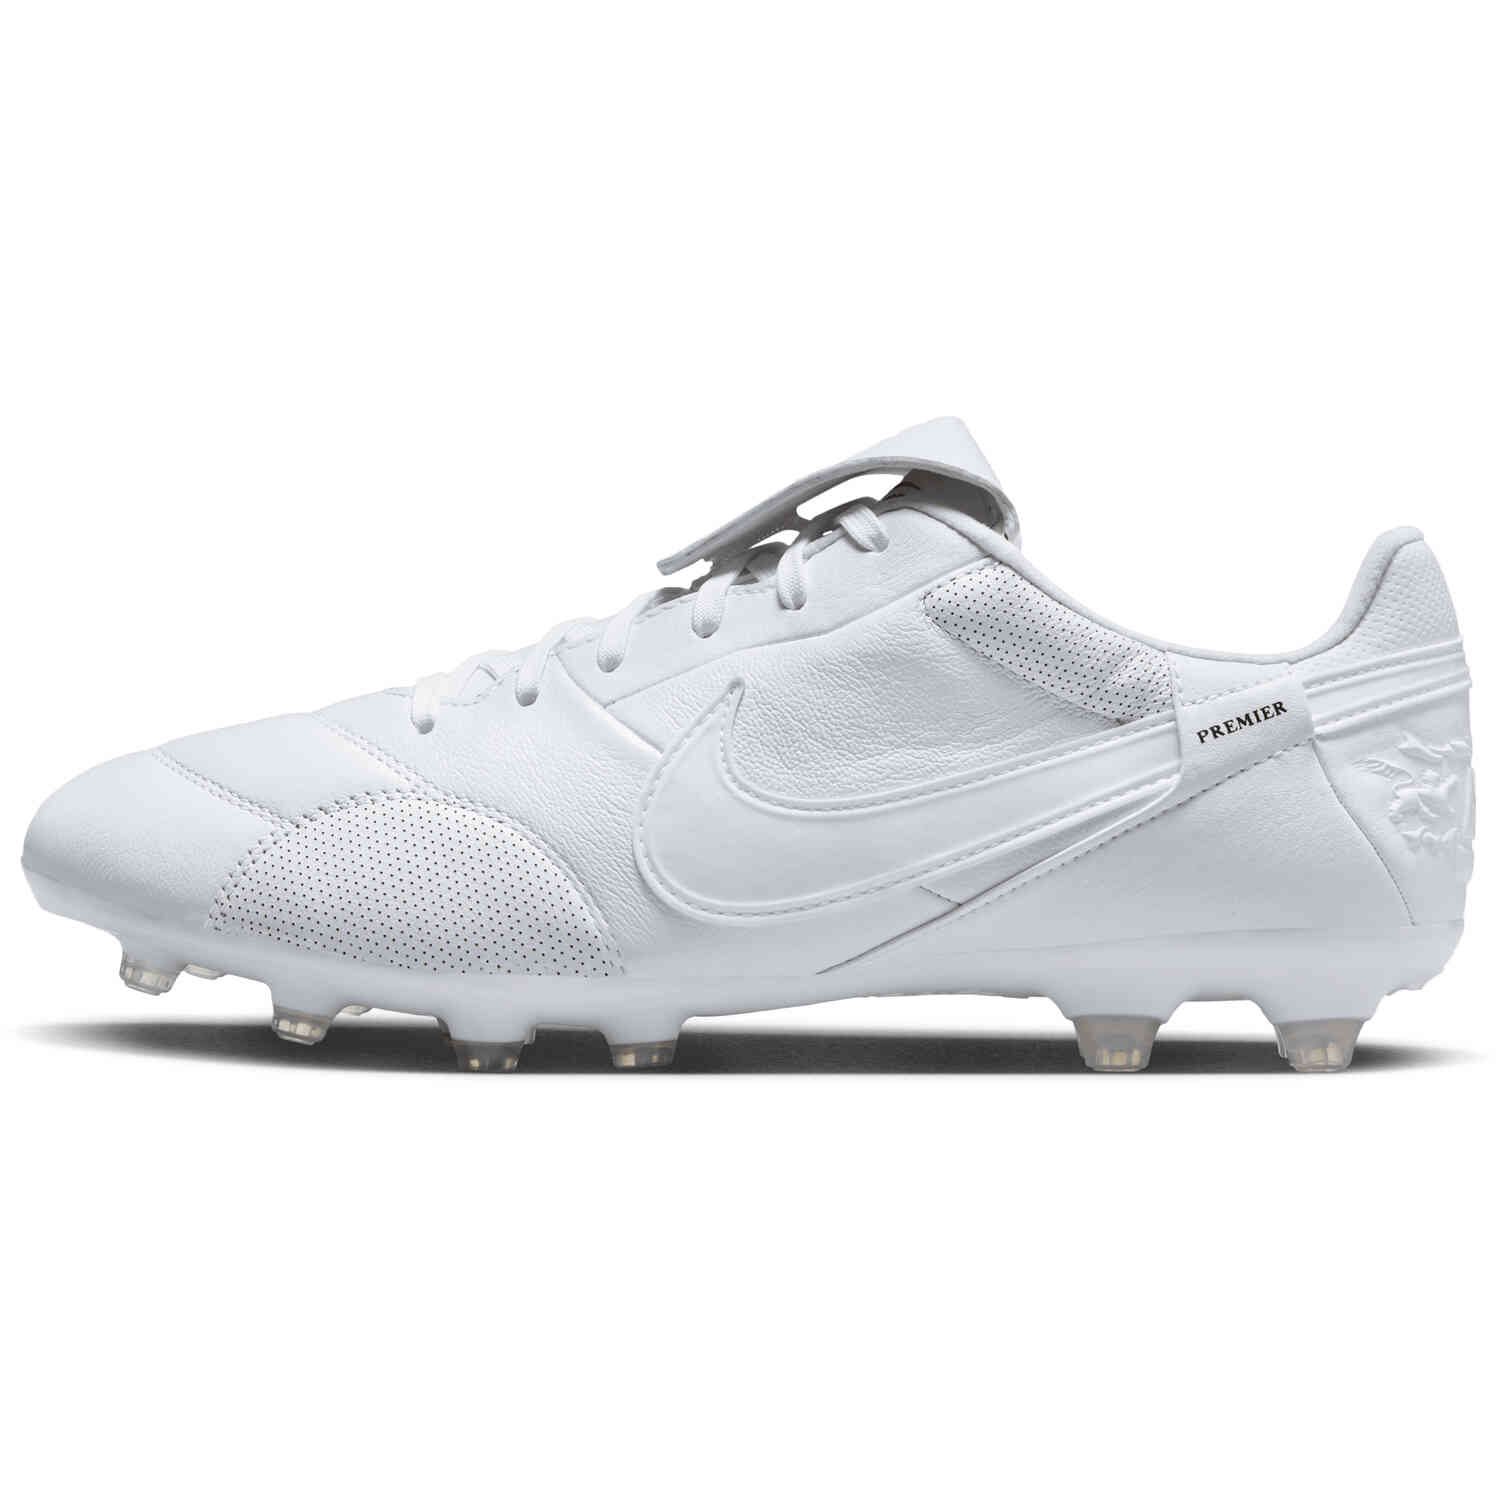 Nike Premier III FG - White & White with White - SoccerPro